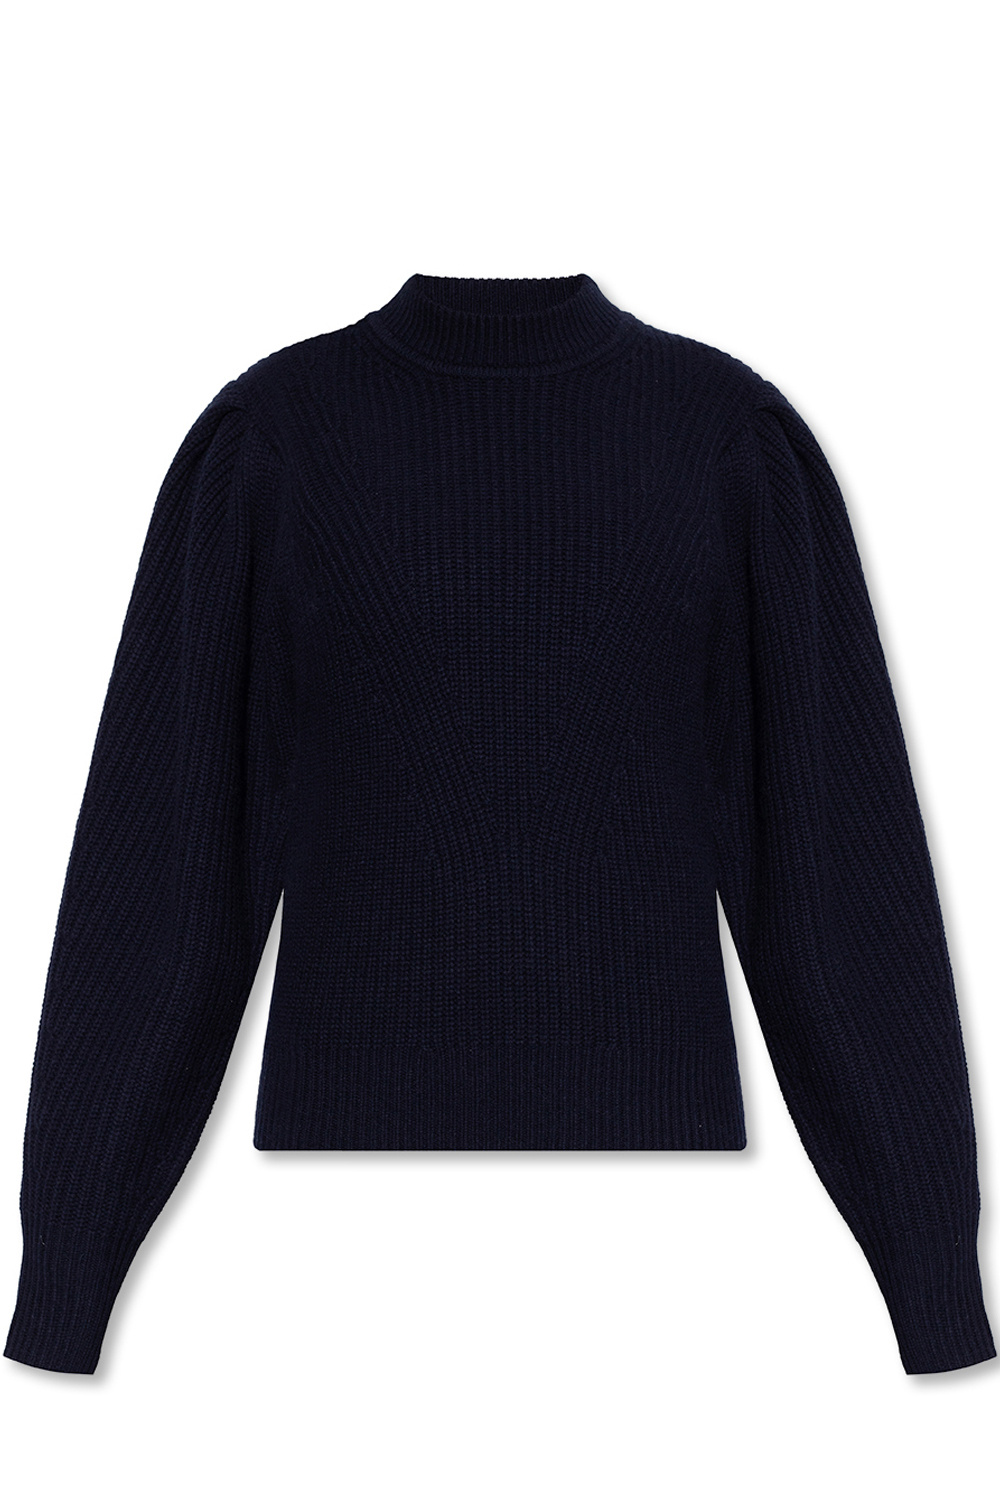 Isabel Marant Wool T-shirts sweater